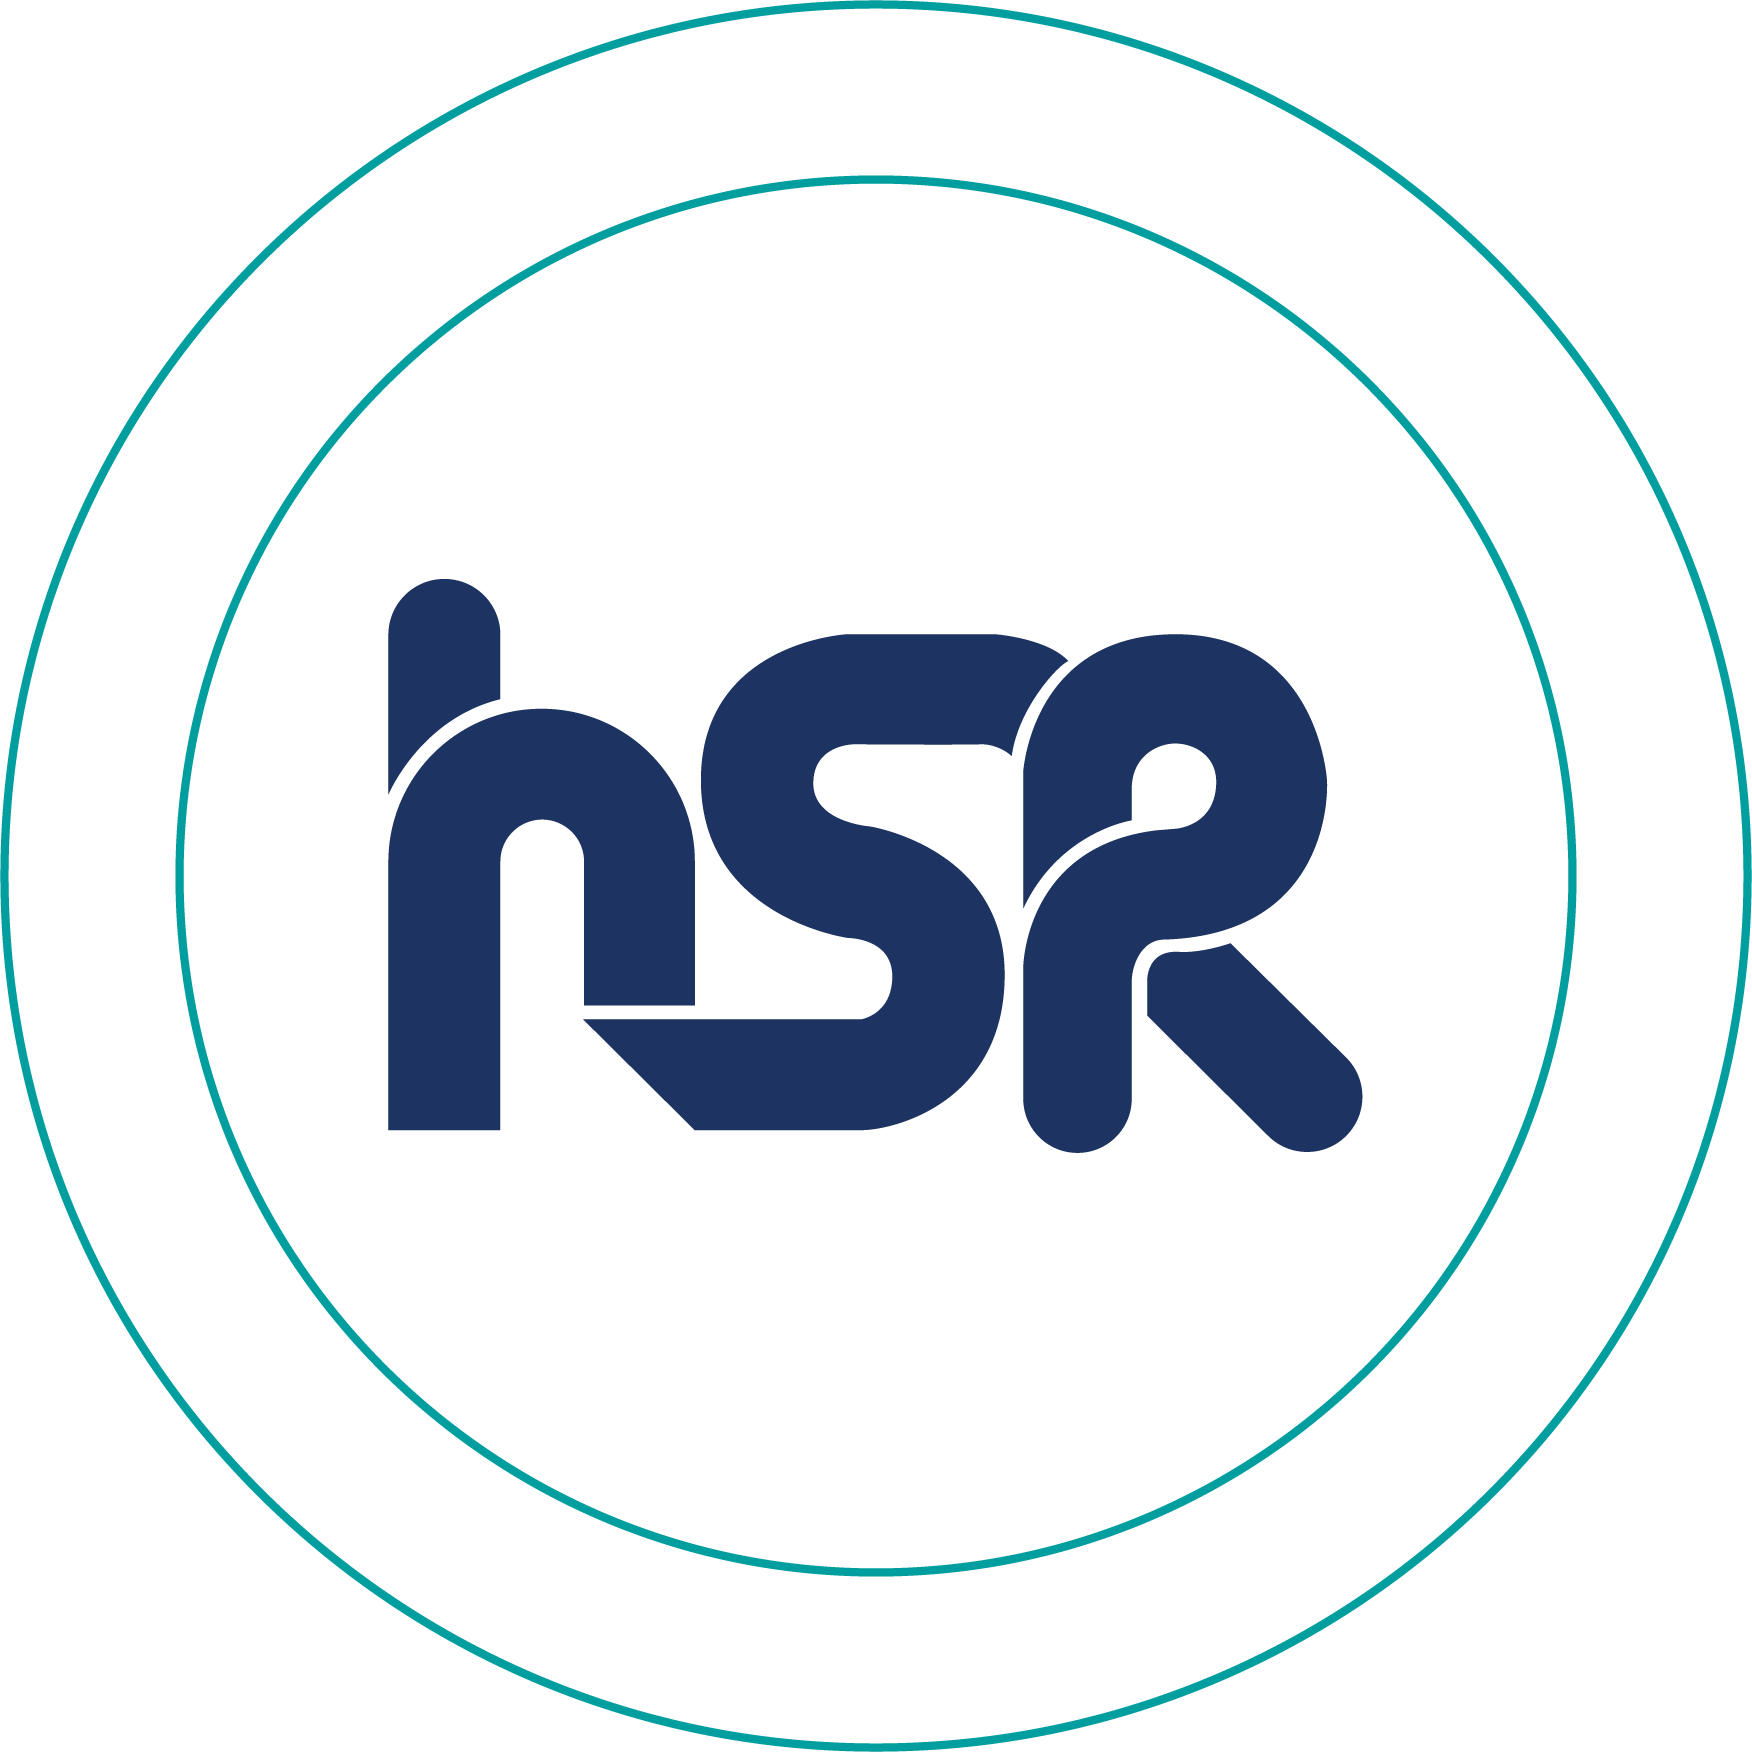 HSR_1